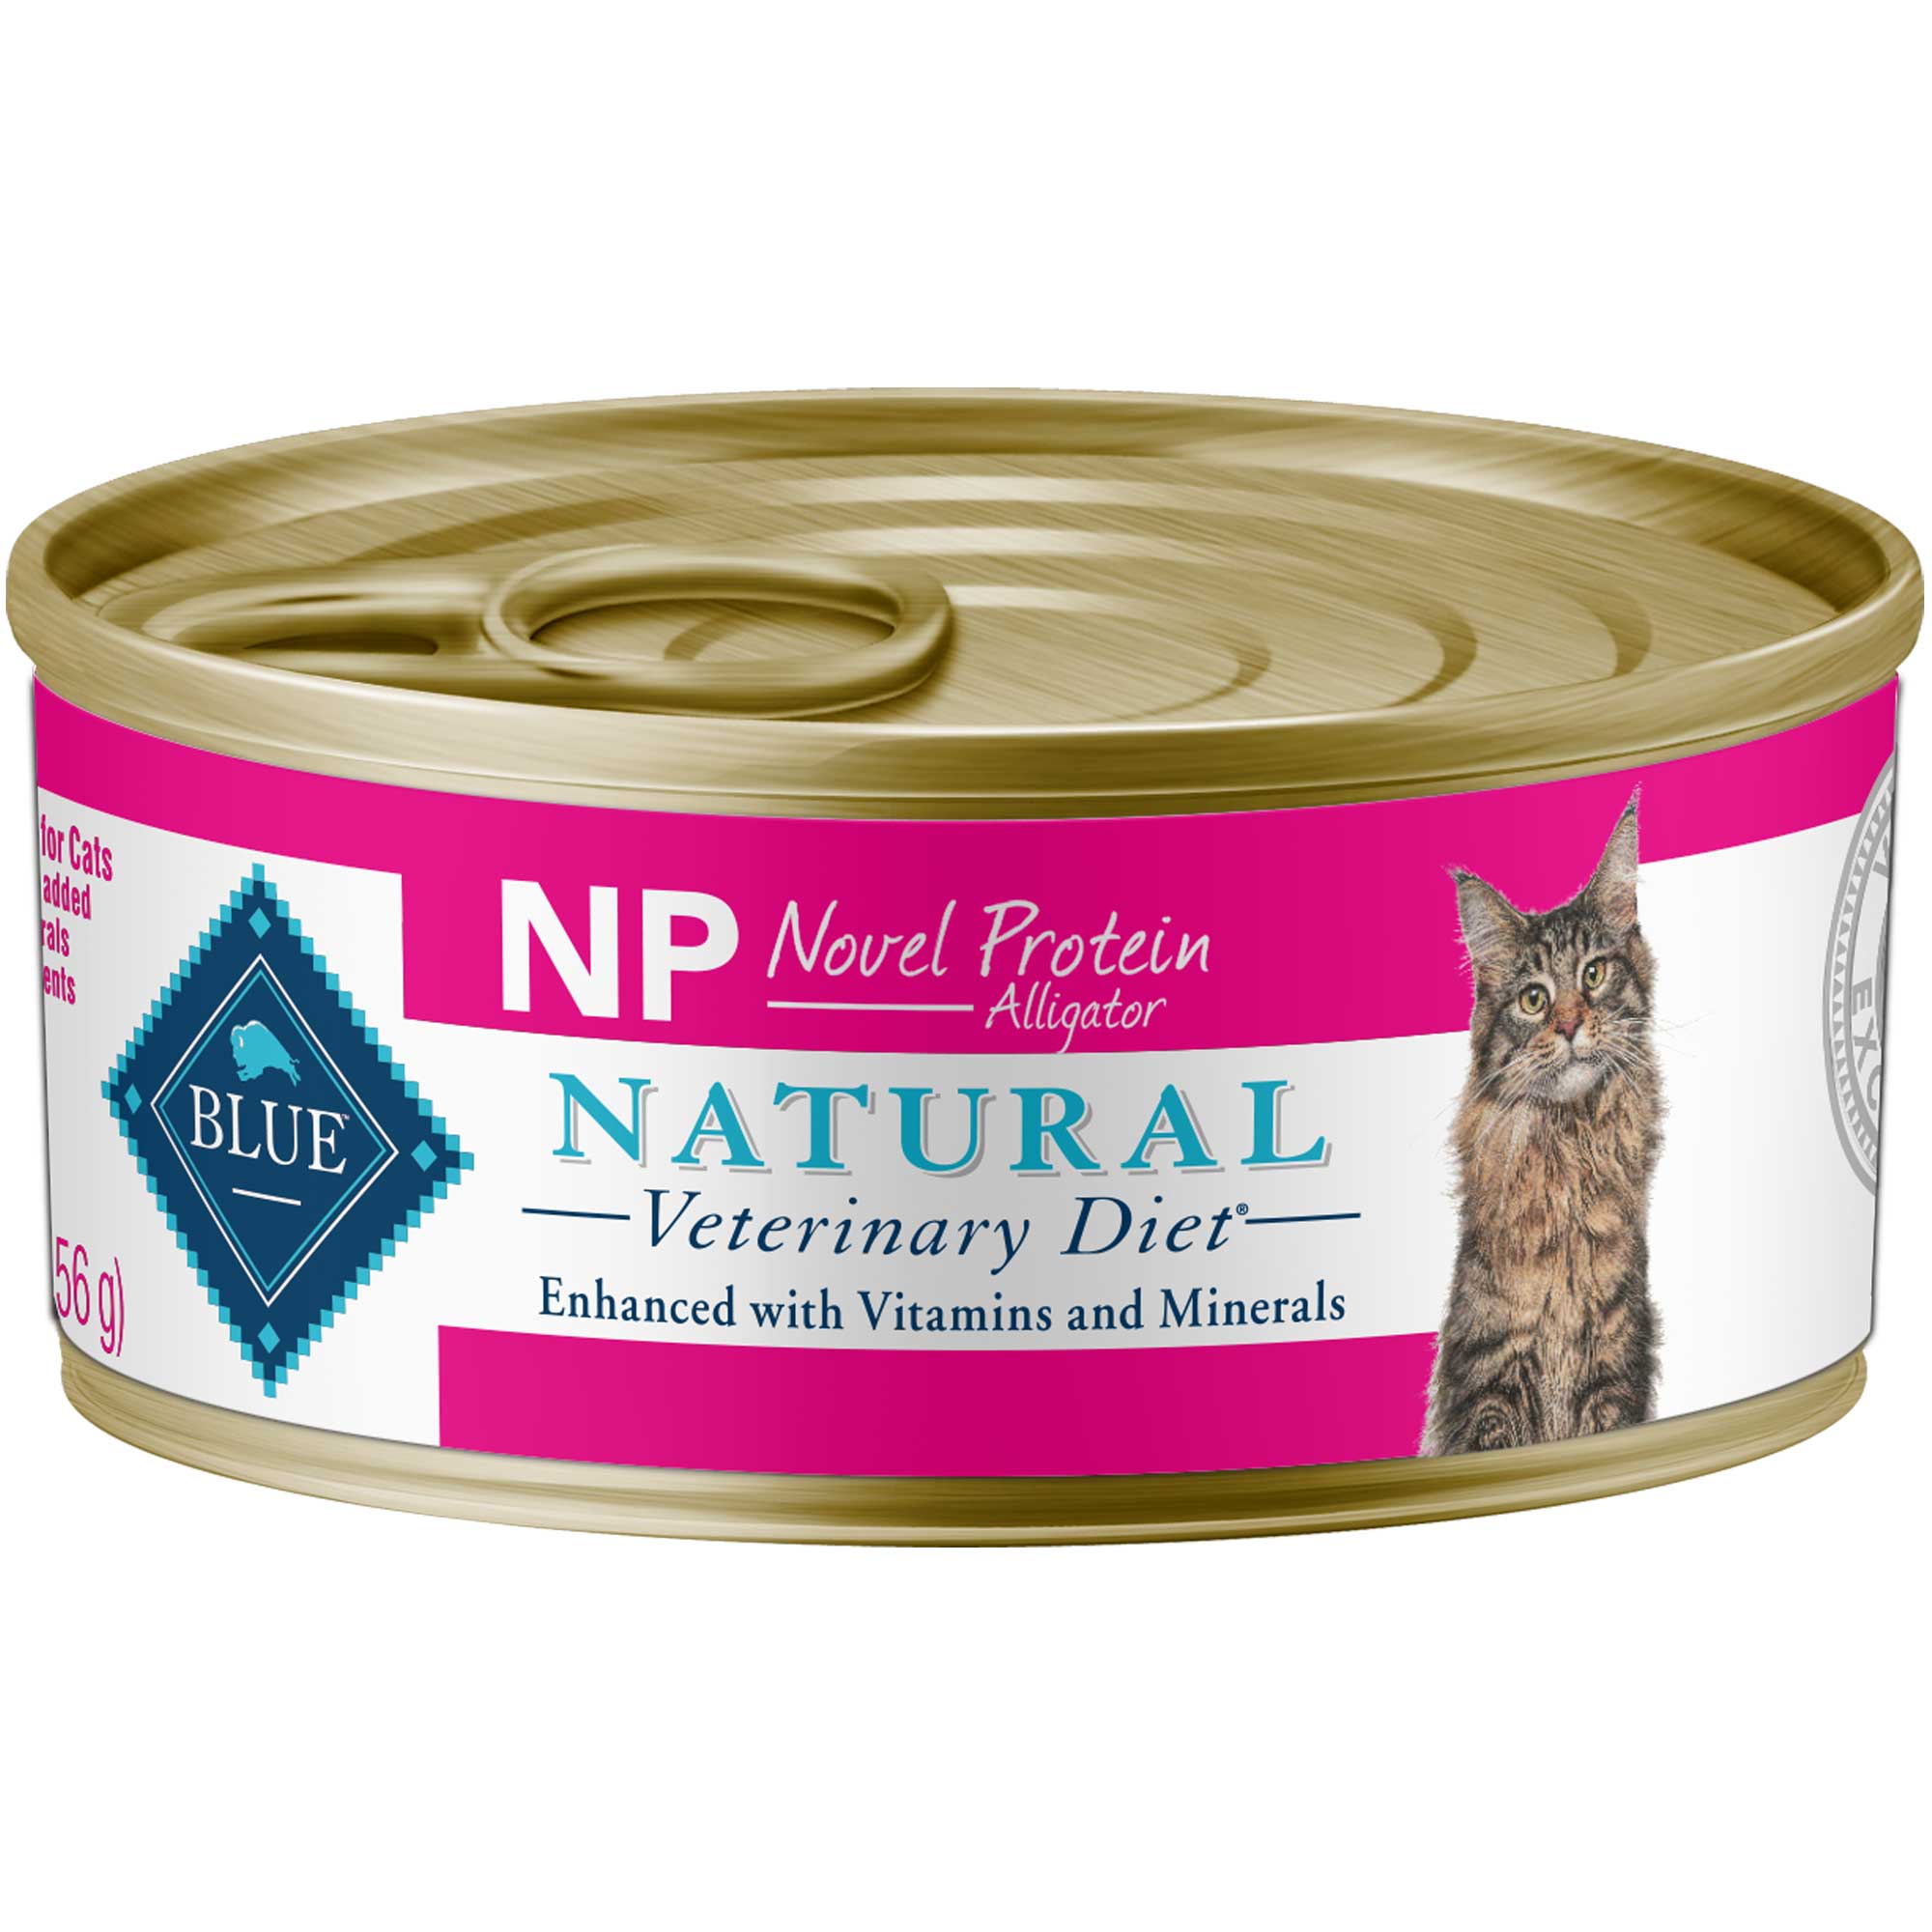 BLUE Natural Veterinary Diet NP Novel Protein-Alligator Wet Cat Food Usage